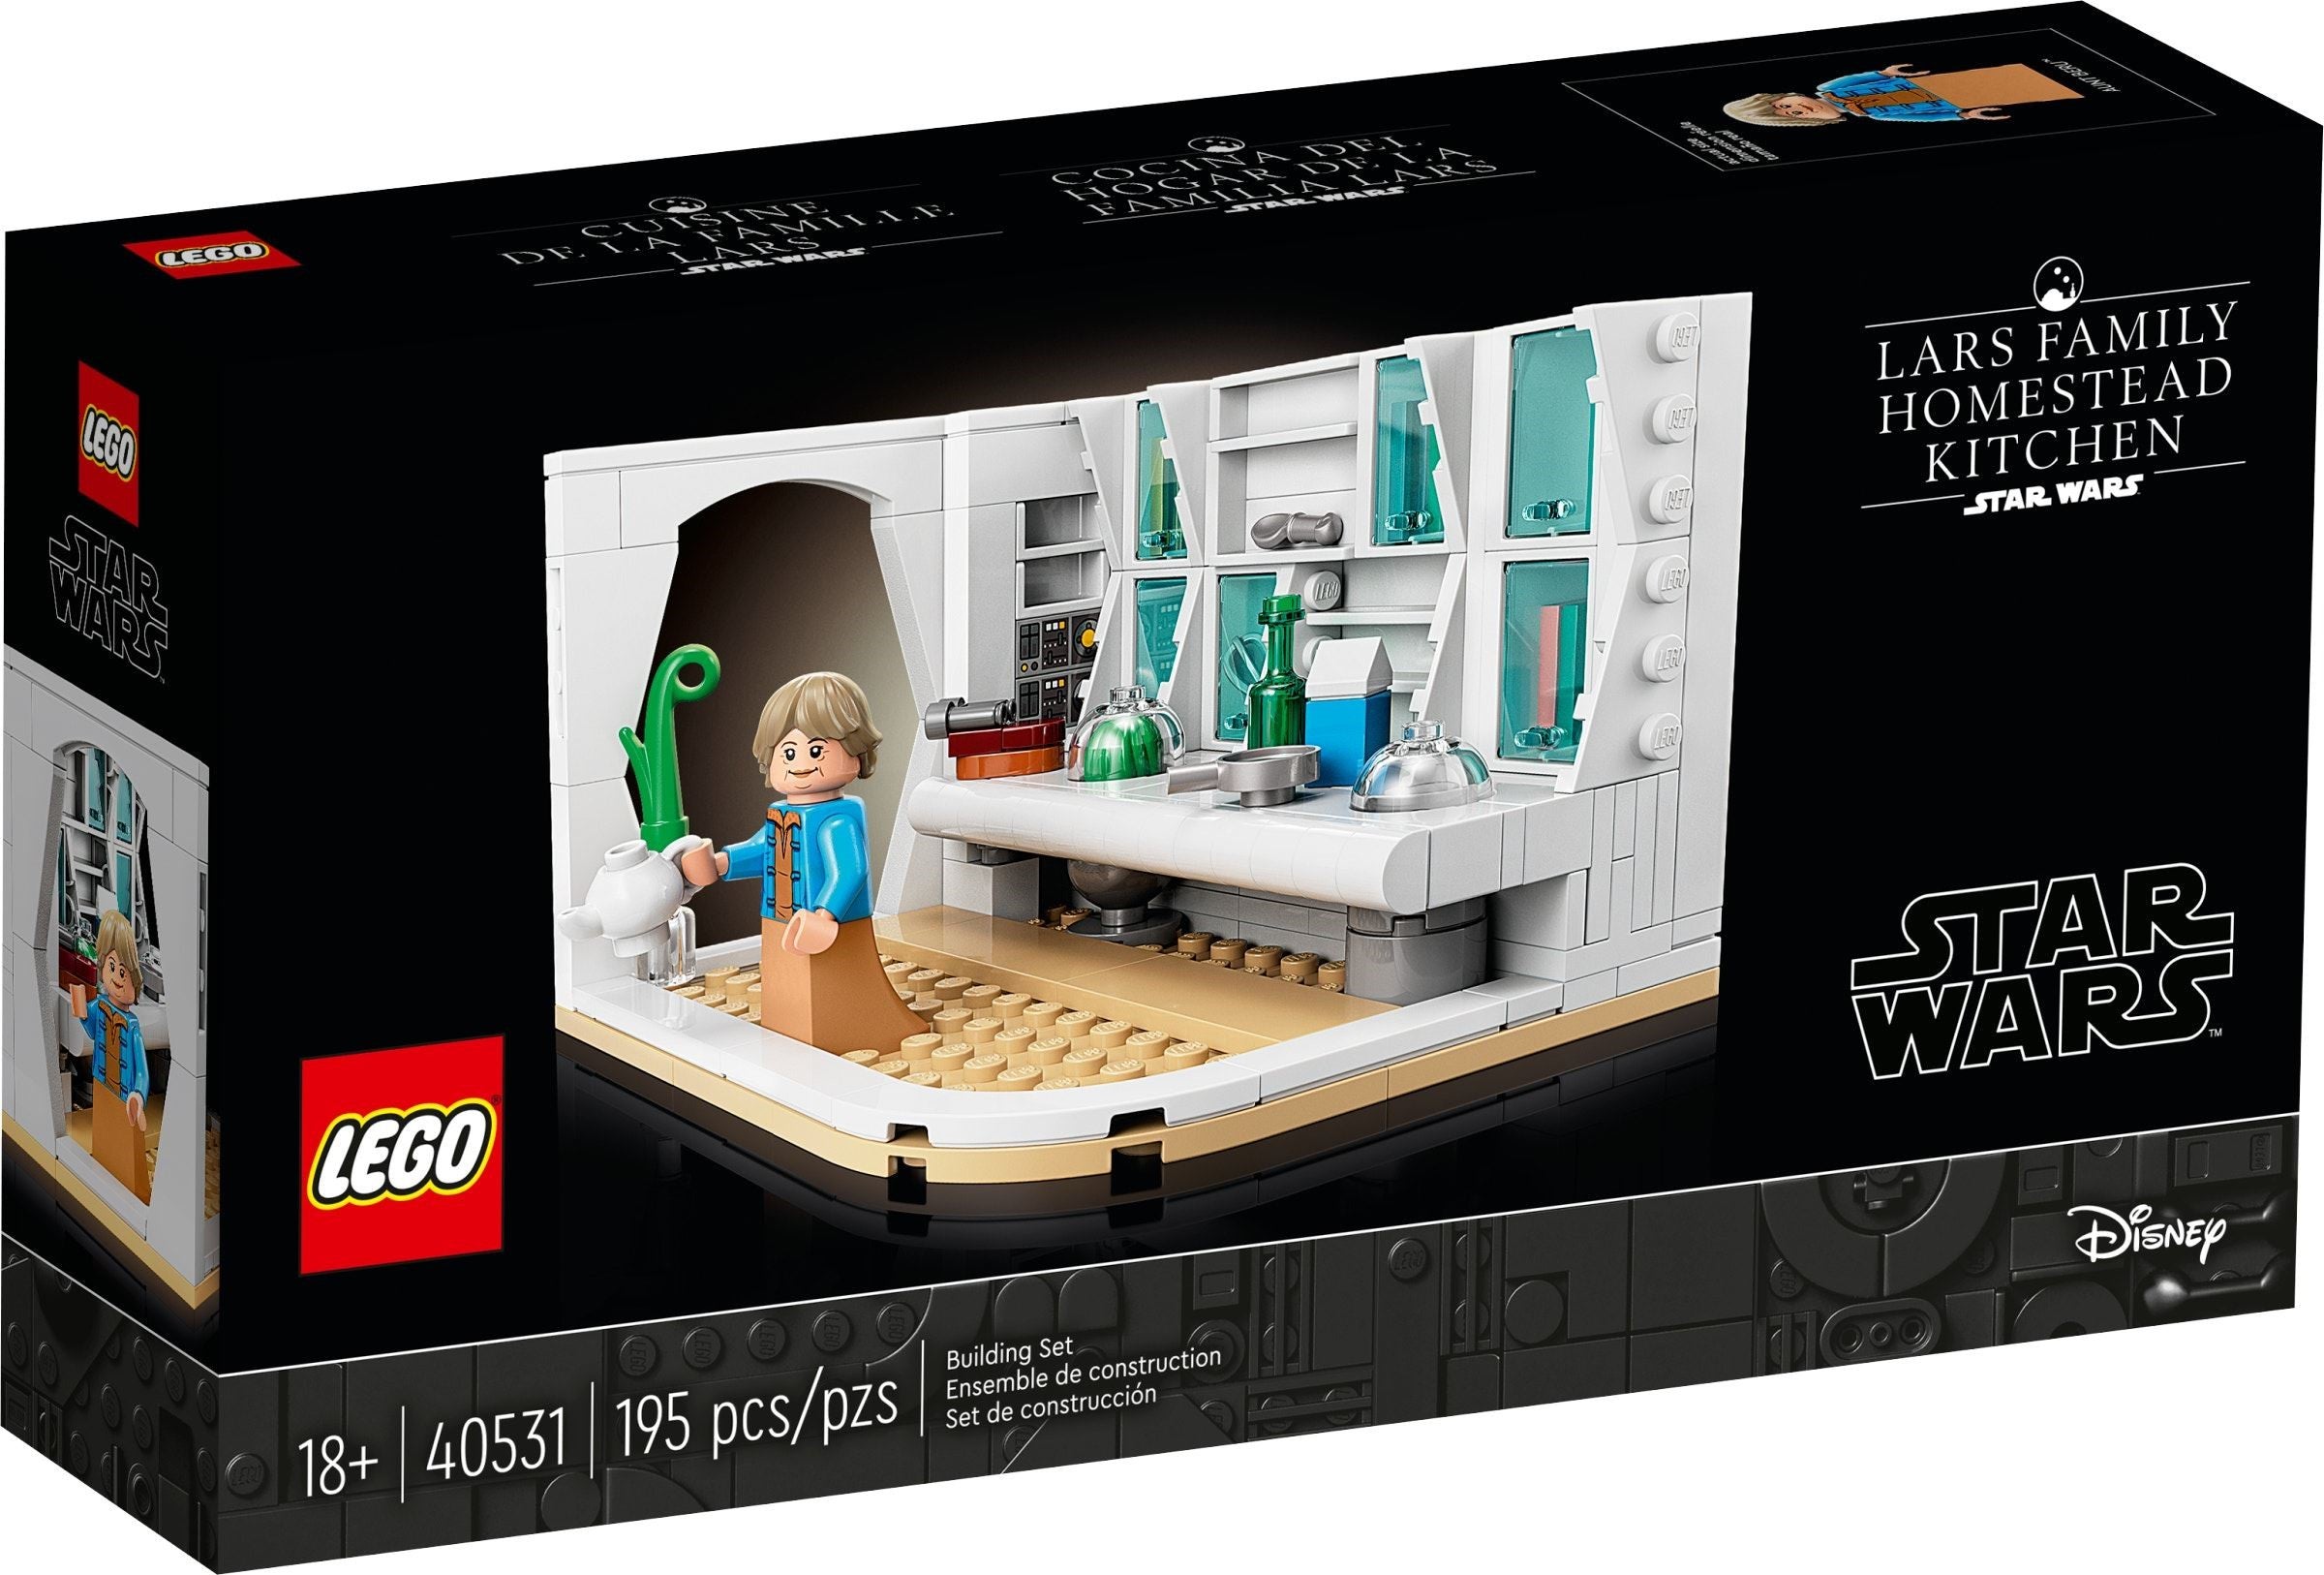 Lego Star Wars 40531 - Lars Family Homestead Kitchen